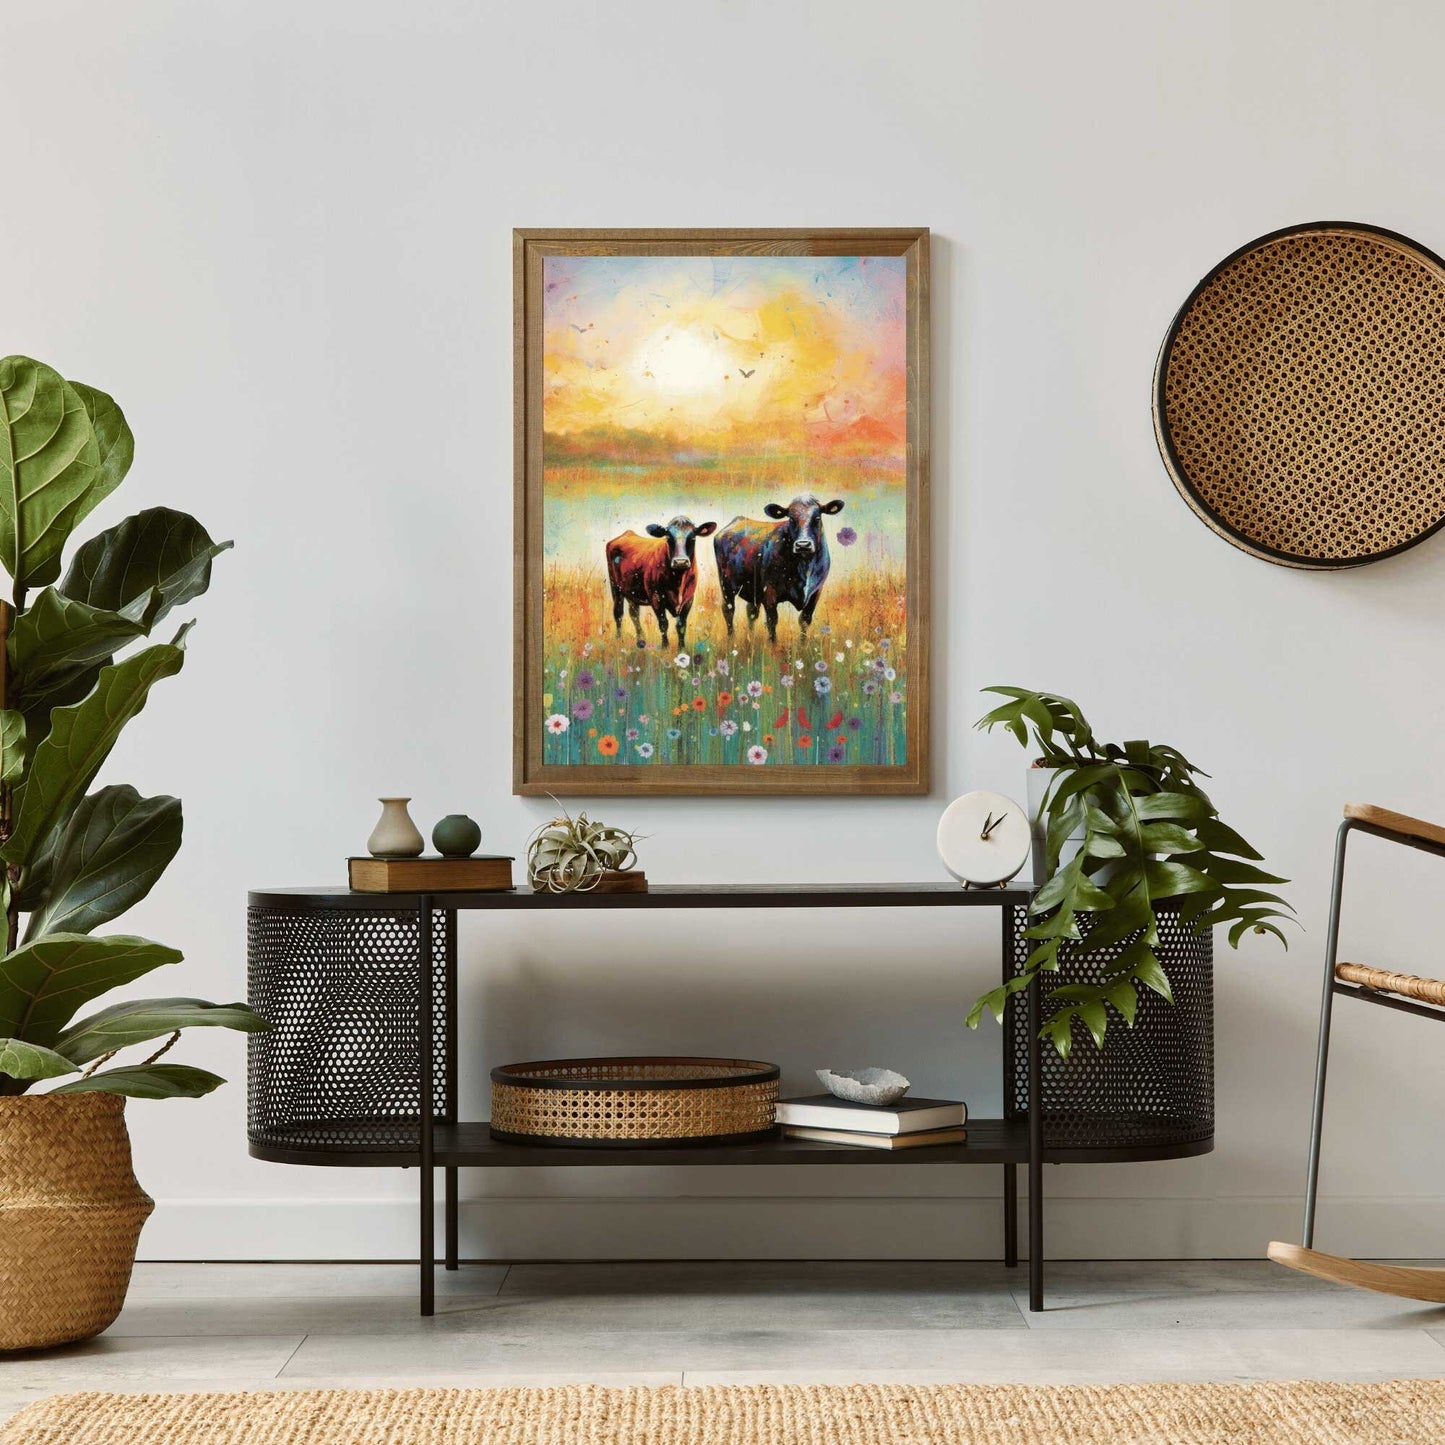 Cow Wall Art, Cattle Print, Country Decor, Floral Animal Decor, Colorful Farm Decor, Cow Decor, Farmhouse Home Decor, Digital Printable Art